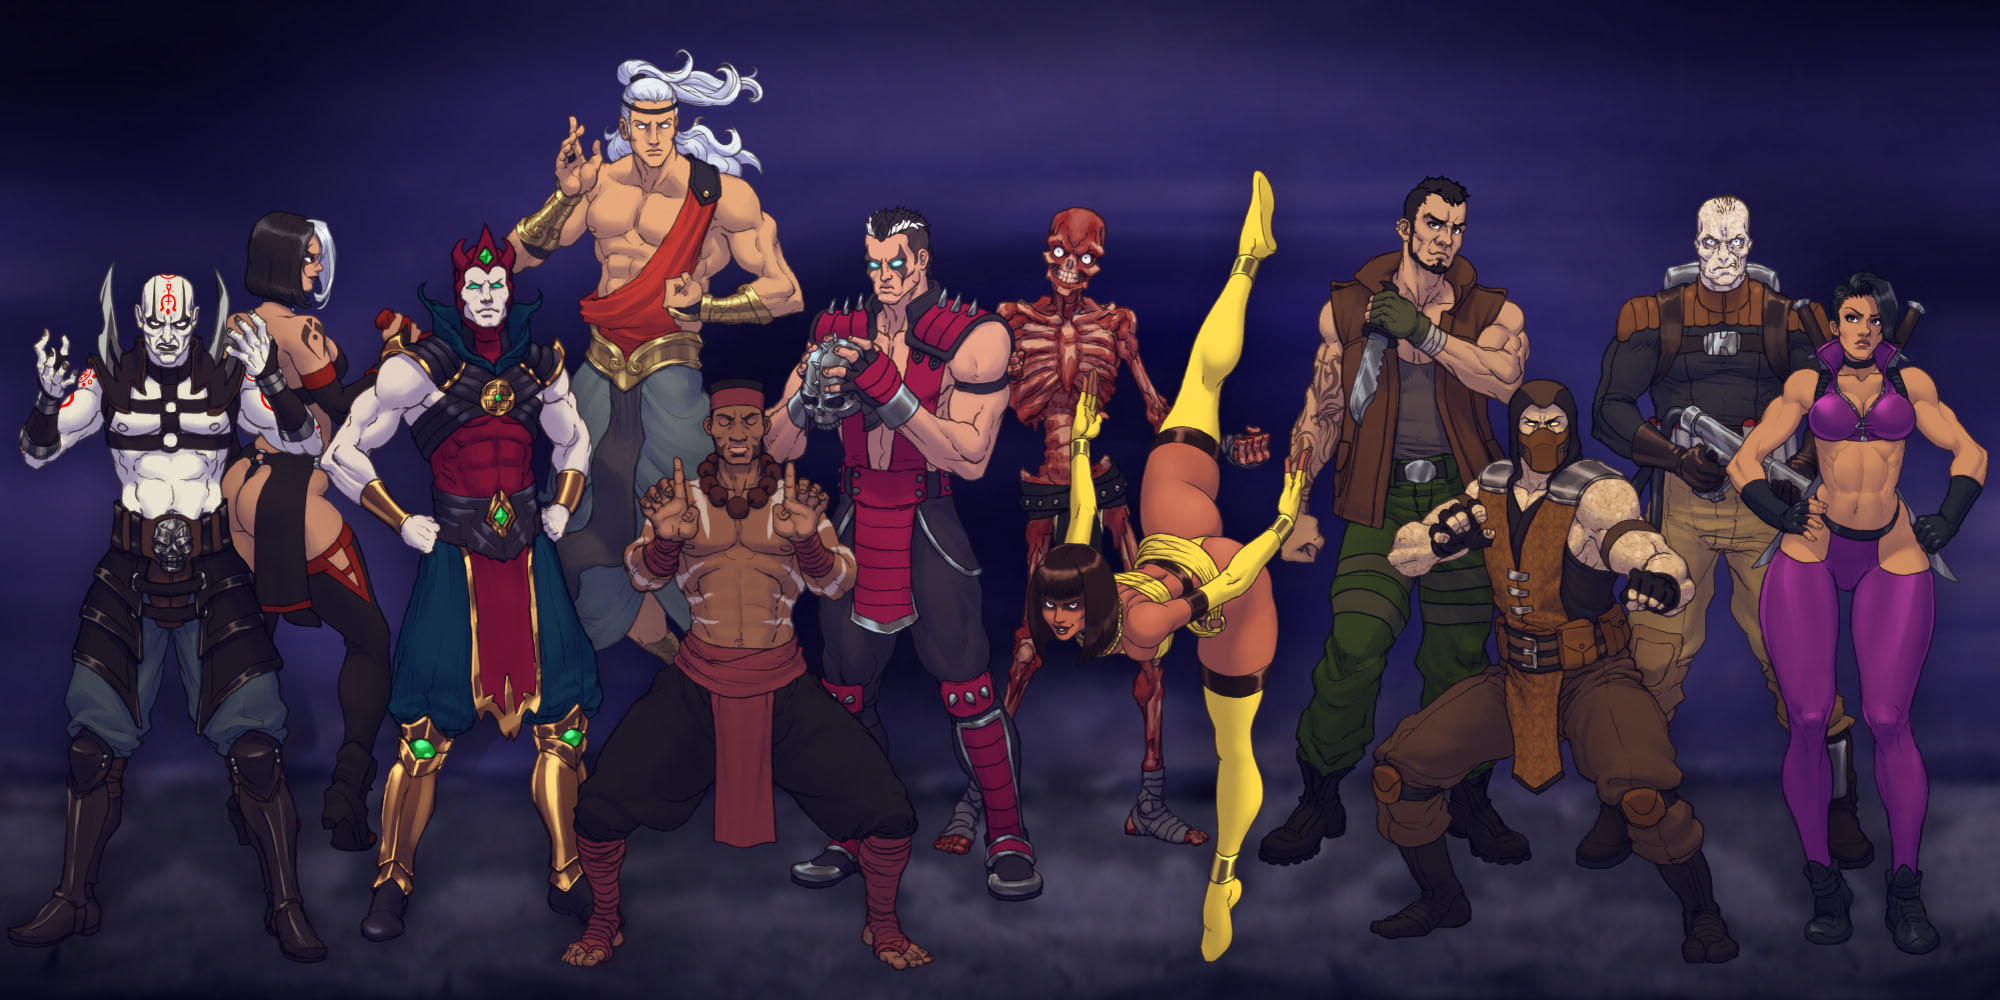 Mortal kombat 3 personagens by joeldiuel on DeviantArt